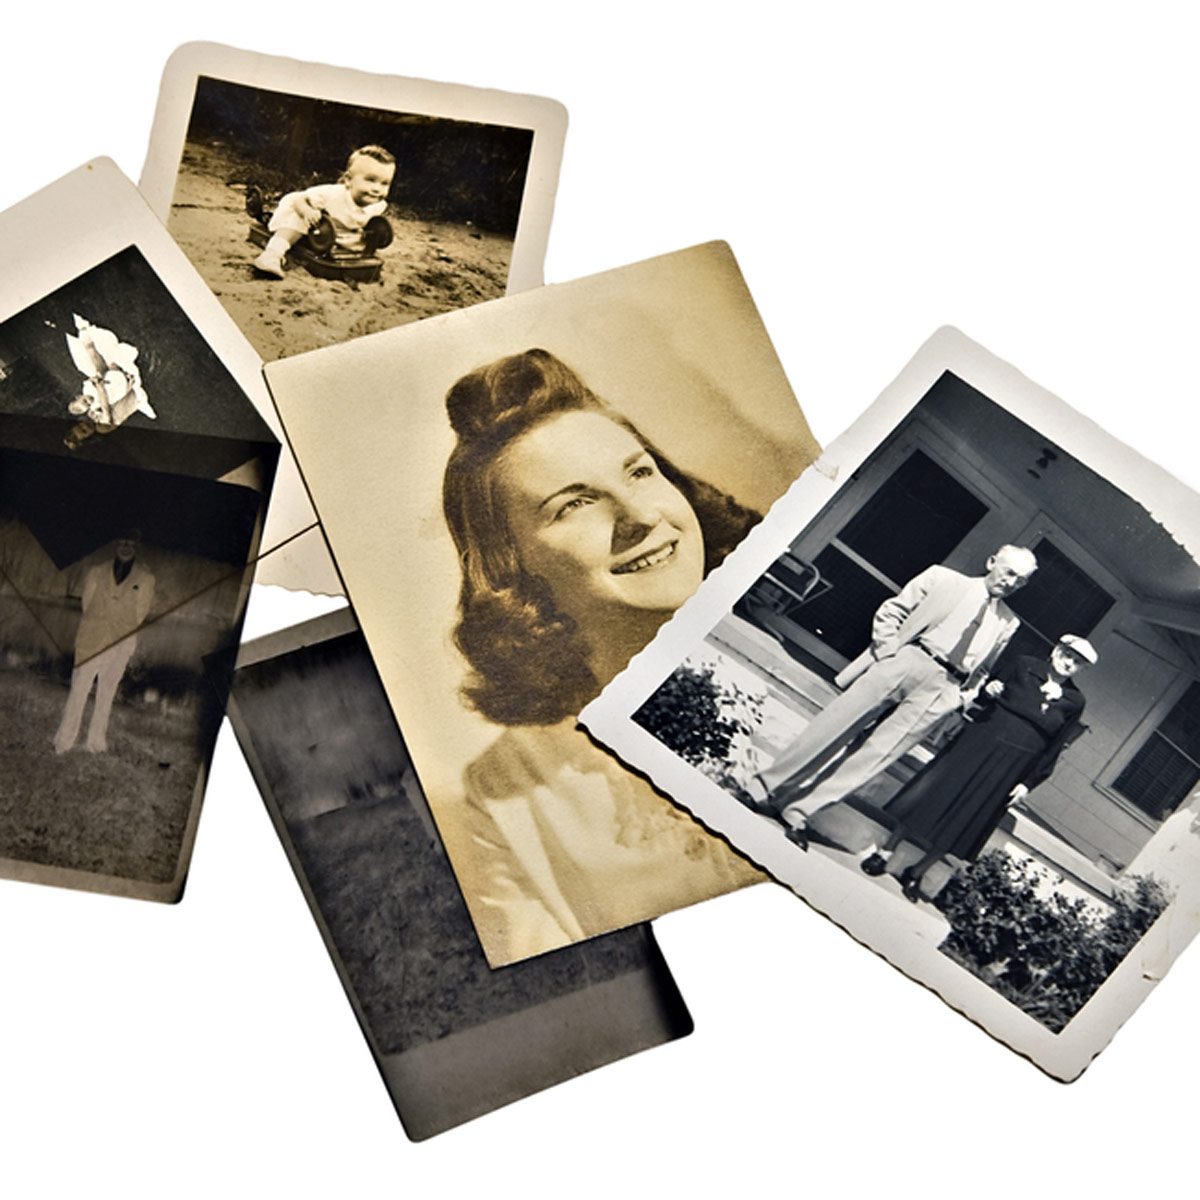 restore old print photos photographs polaroids memories